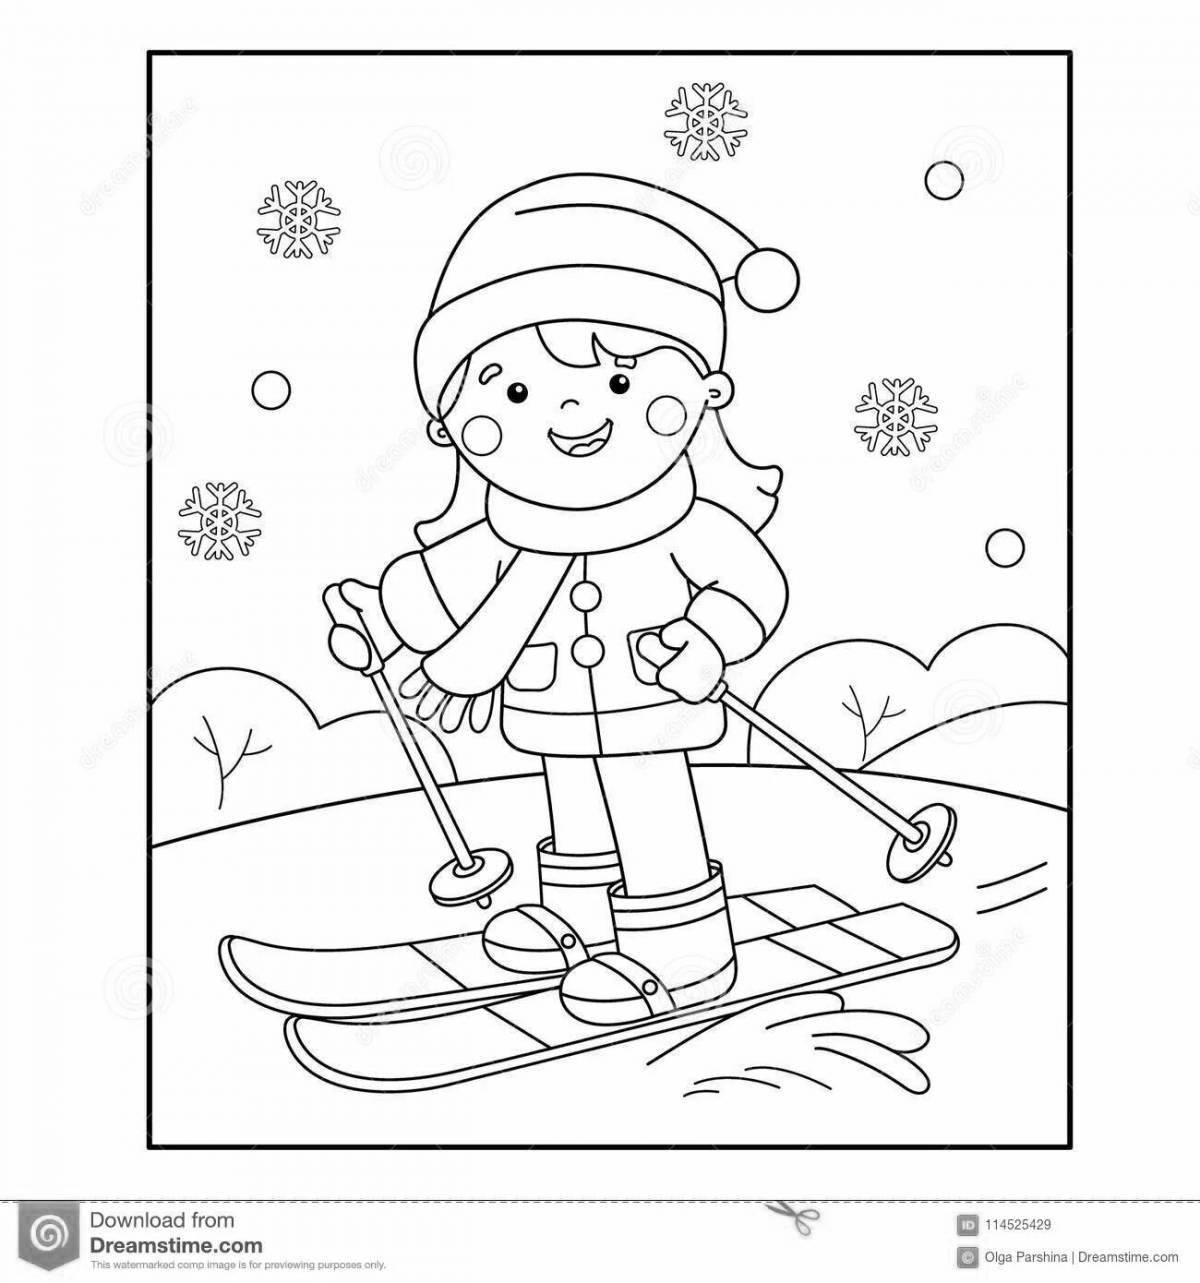 Adorable ski coloring book